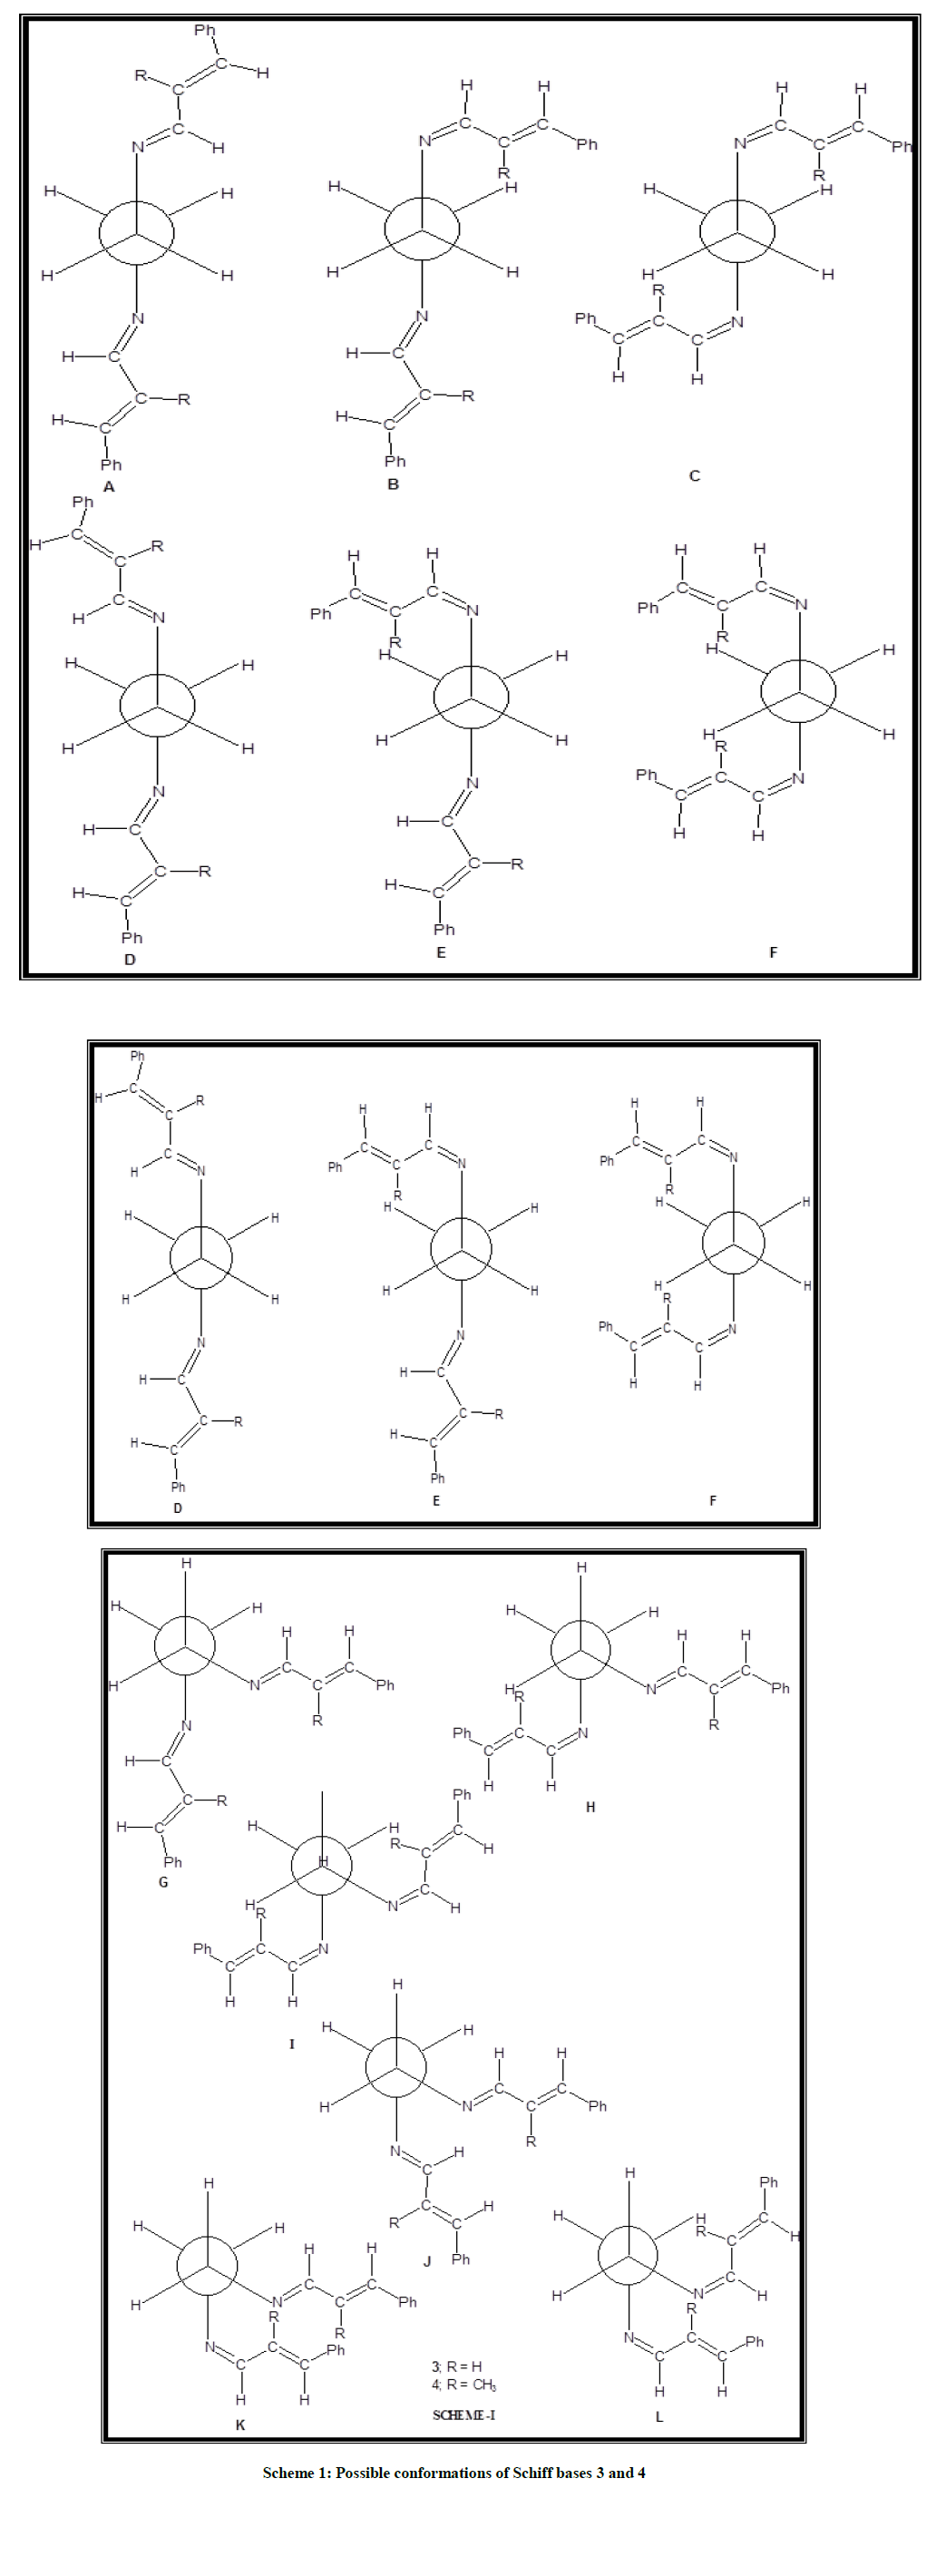 derpharmachemica-conformations